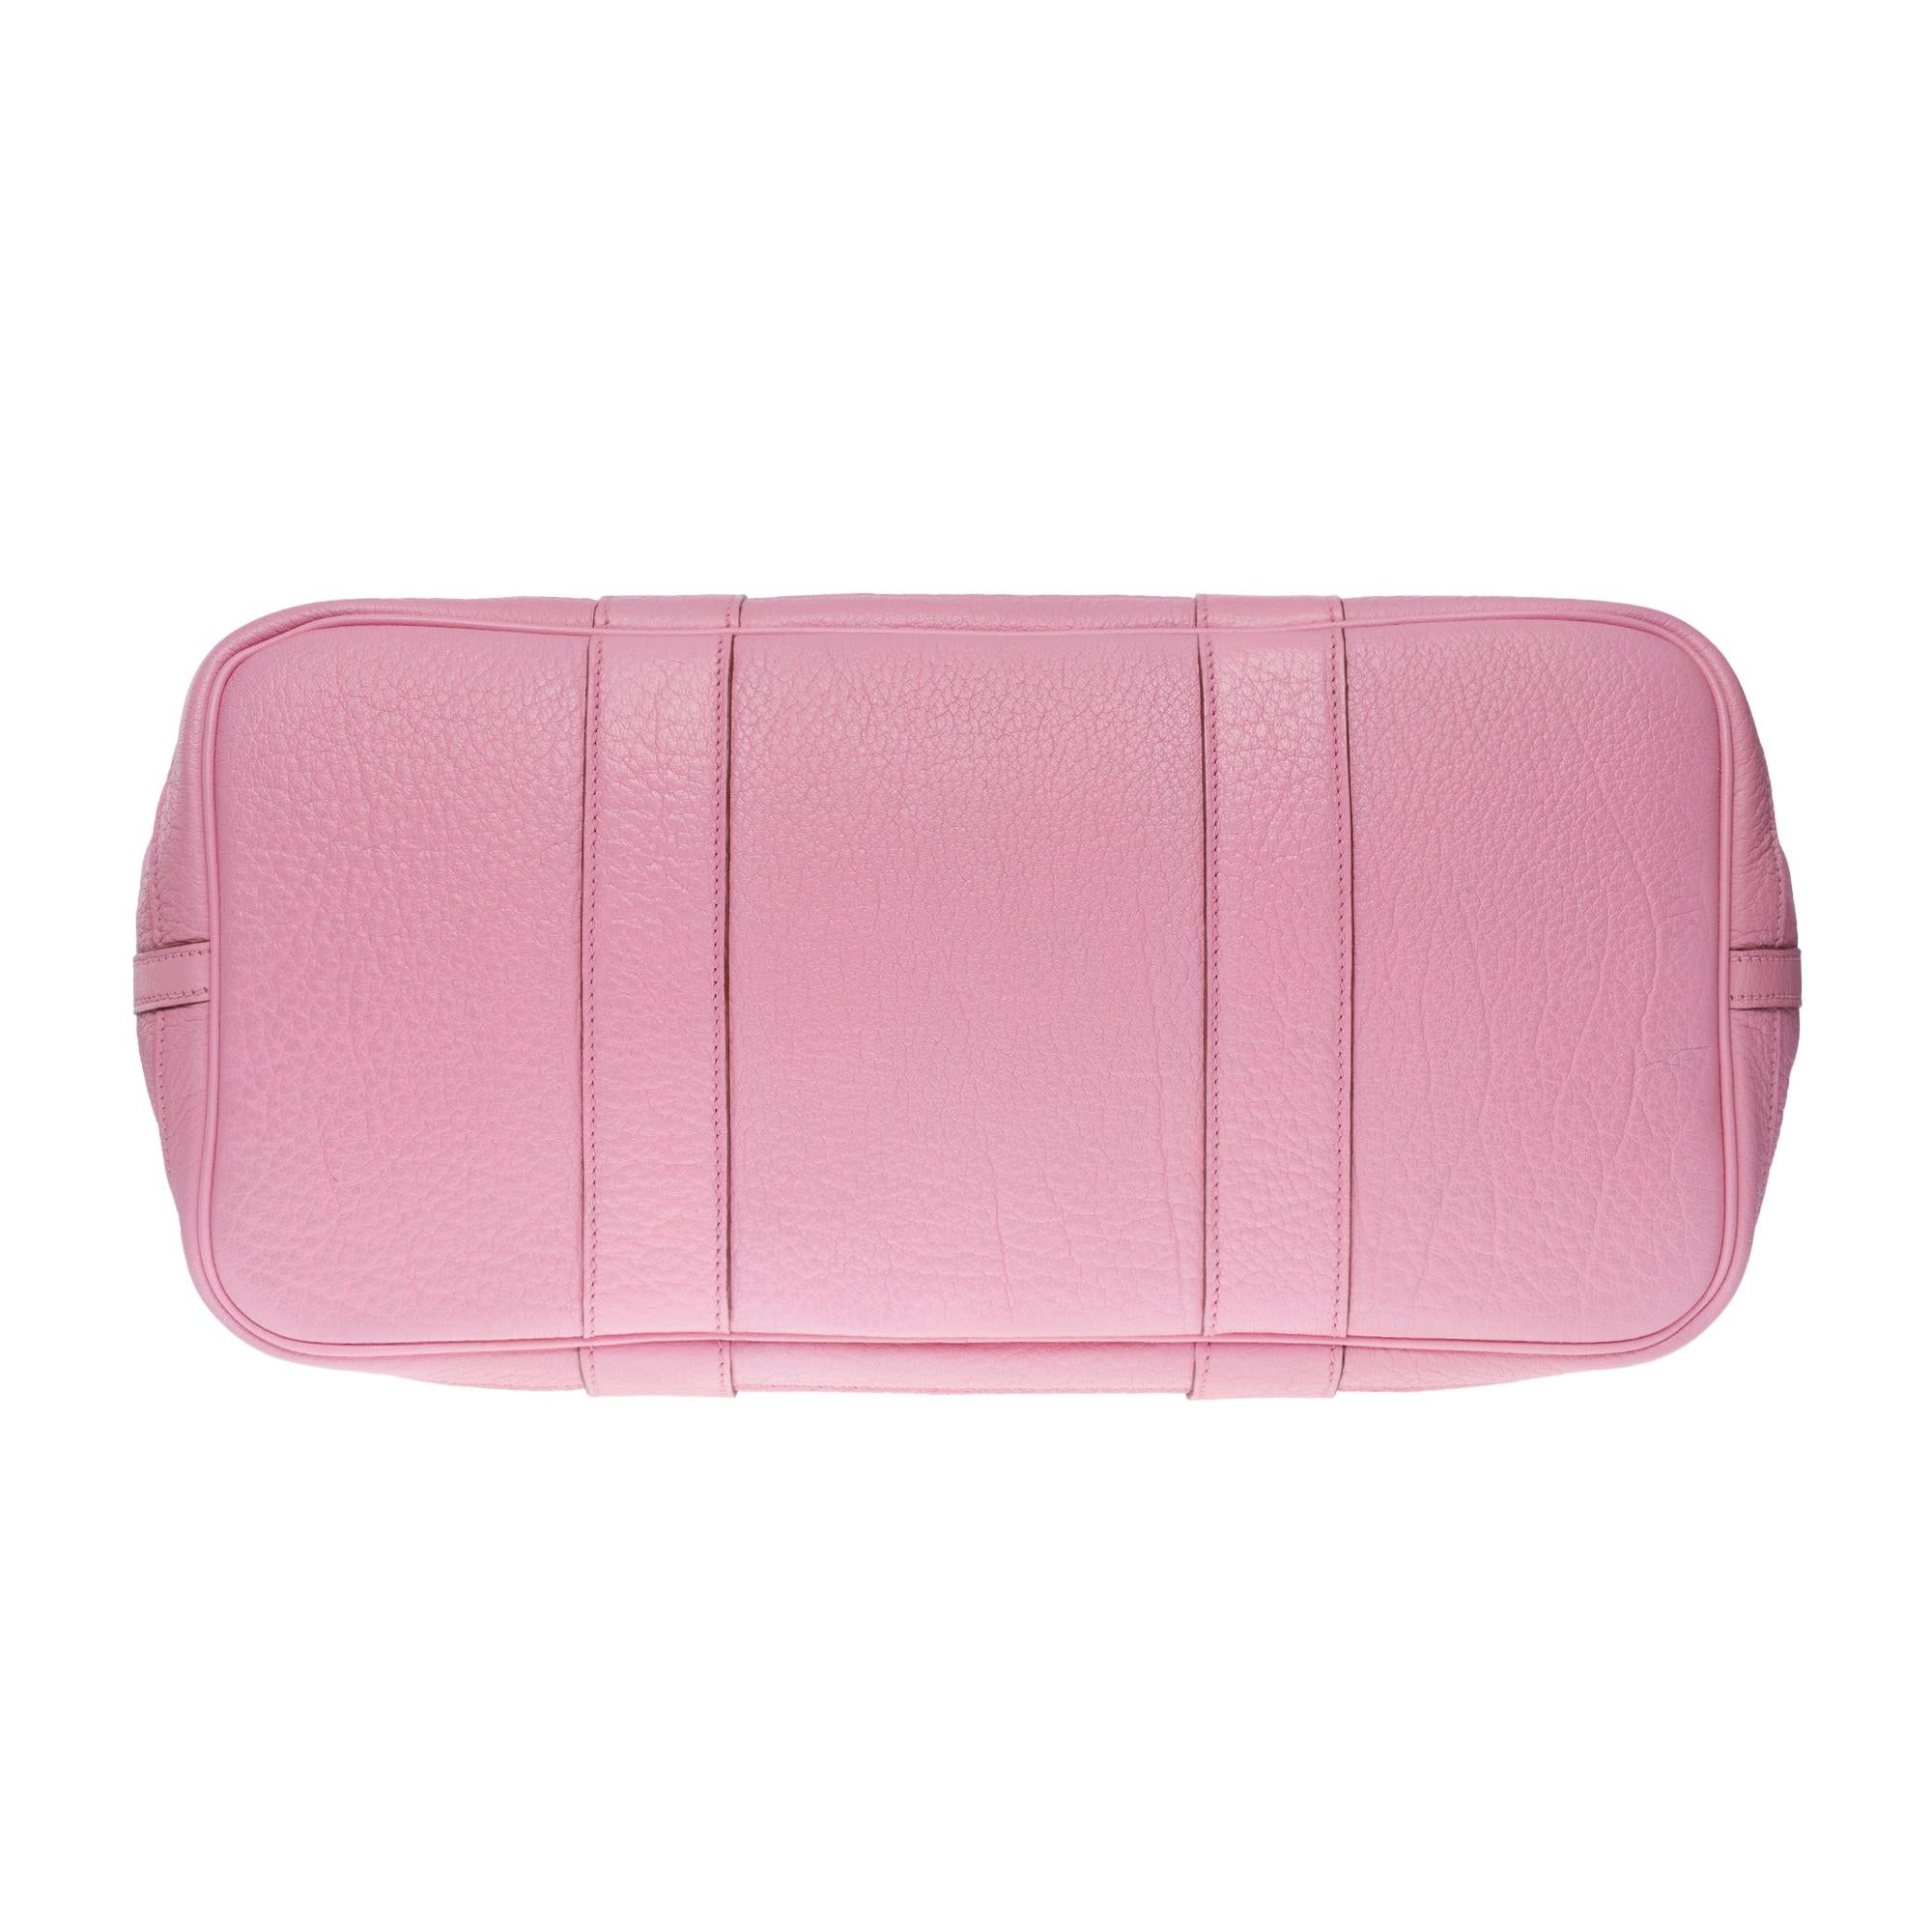 Gorgeous Hermès Garden Party 36 Tote bag in Sakura Pink Negonda leather, SHW 5